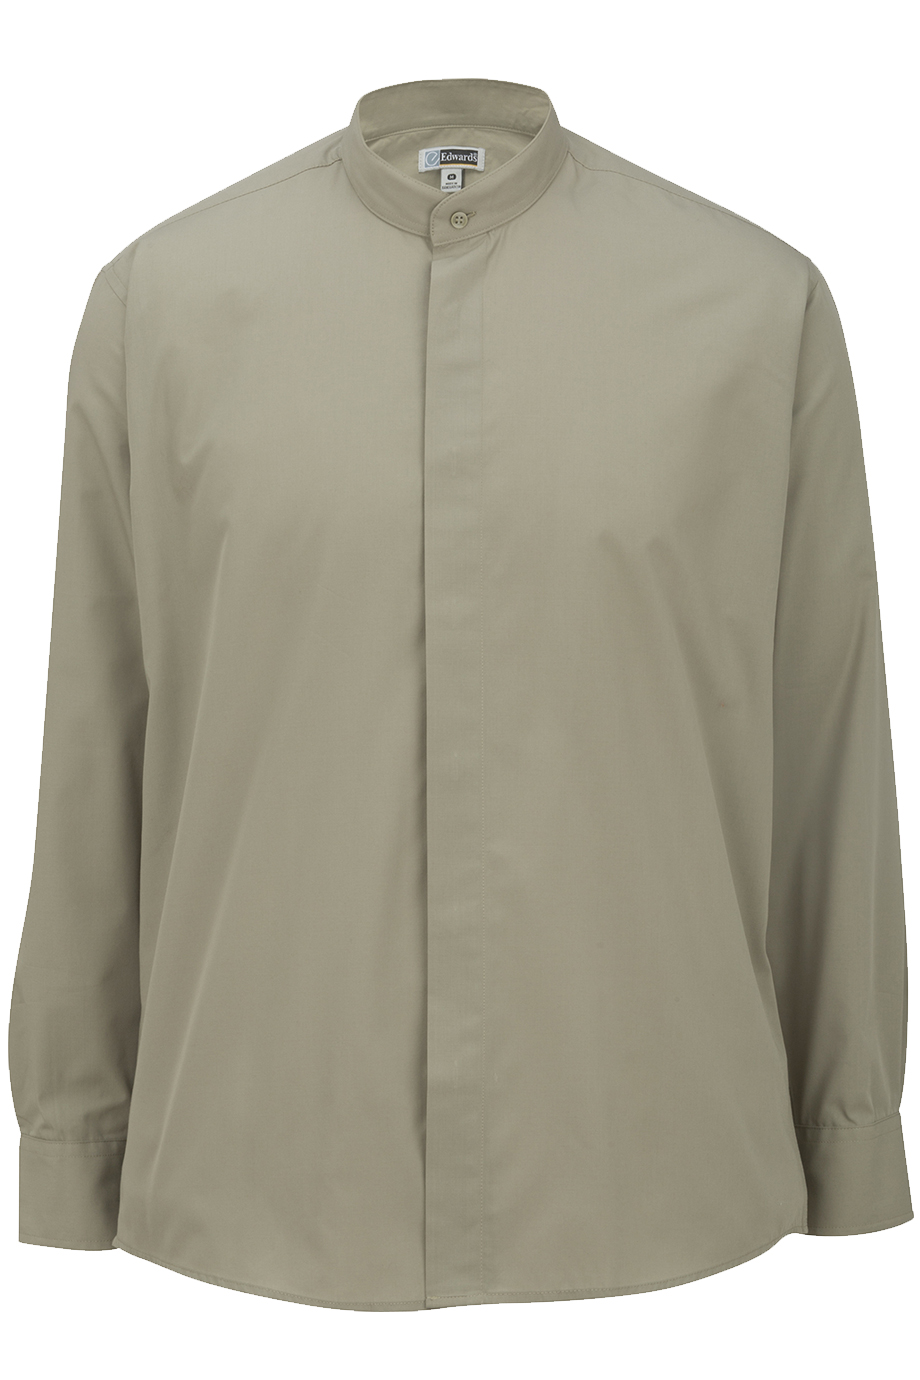 Edwards Garments 1396 Men's Long Sleeve Banded Collar Shirt